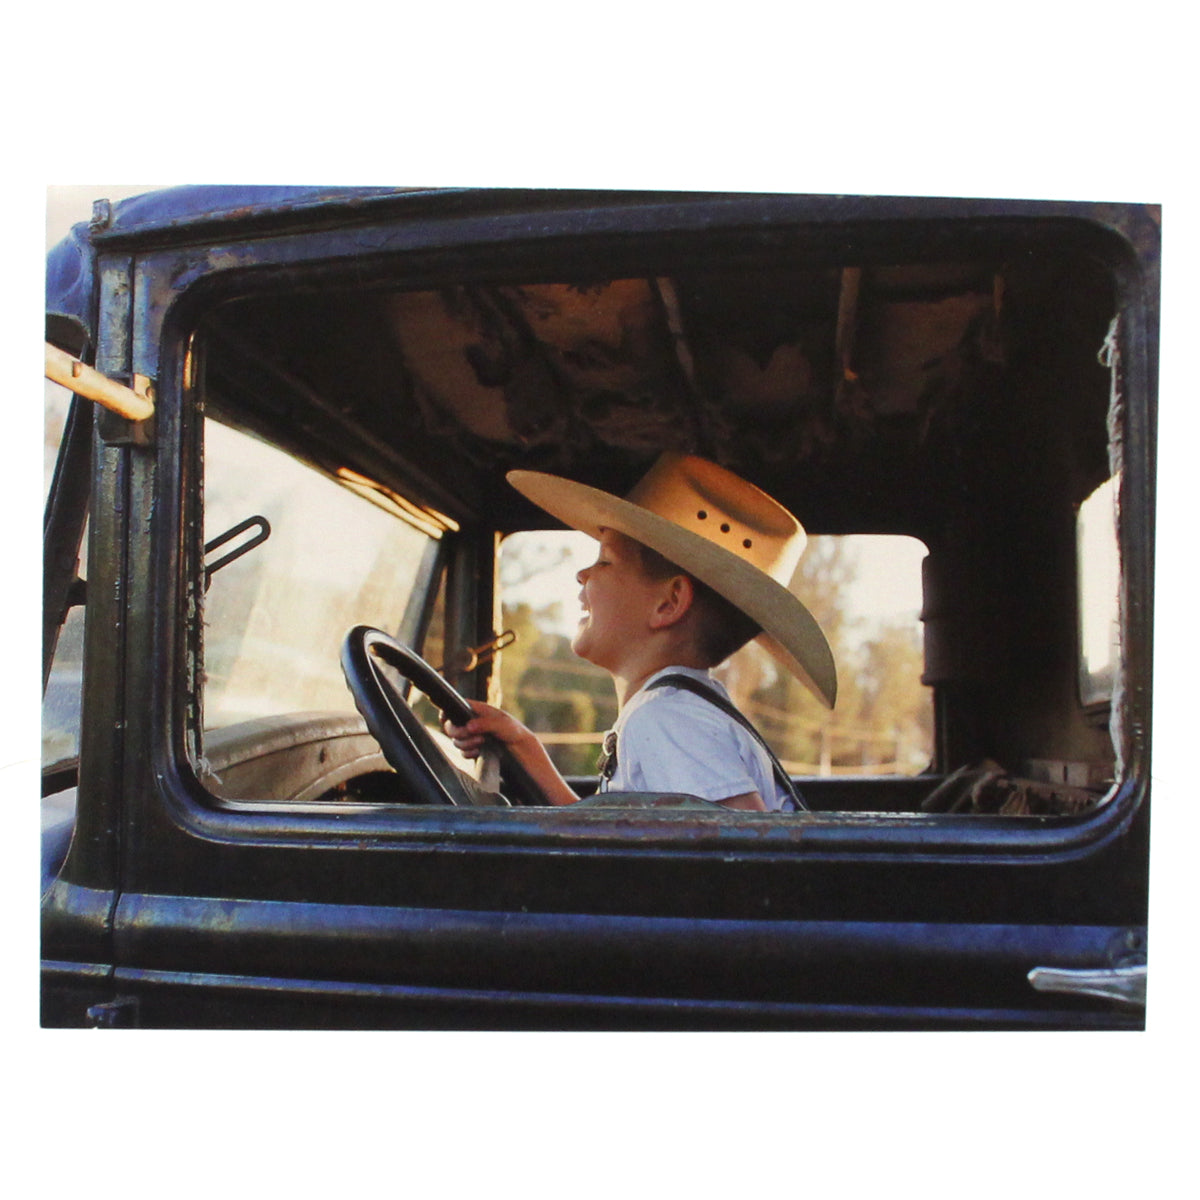 Birthday Card: (image of boy in truck)